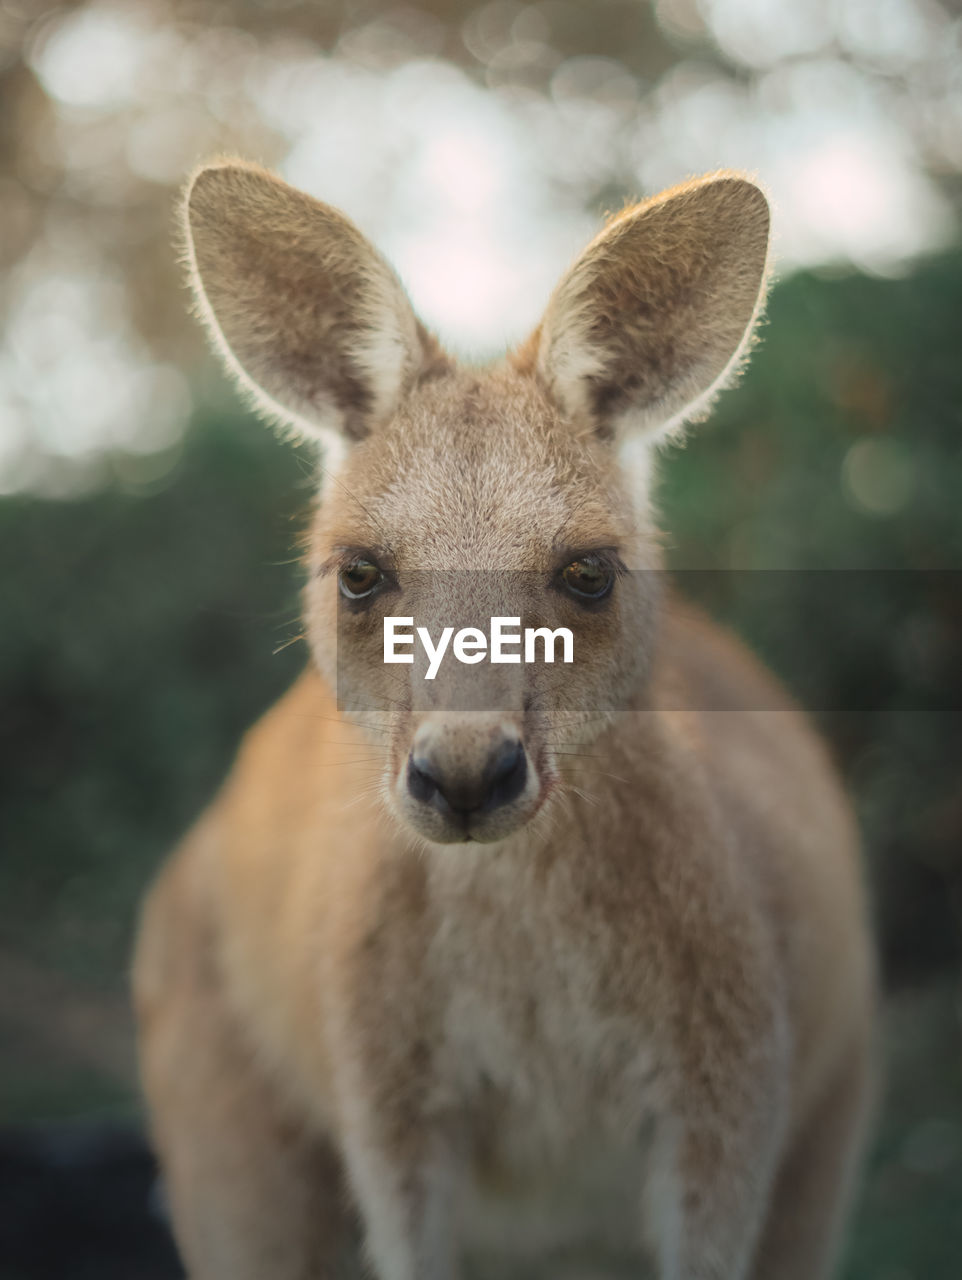 Close-up portrait of kangaroo